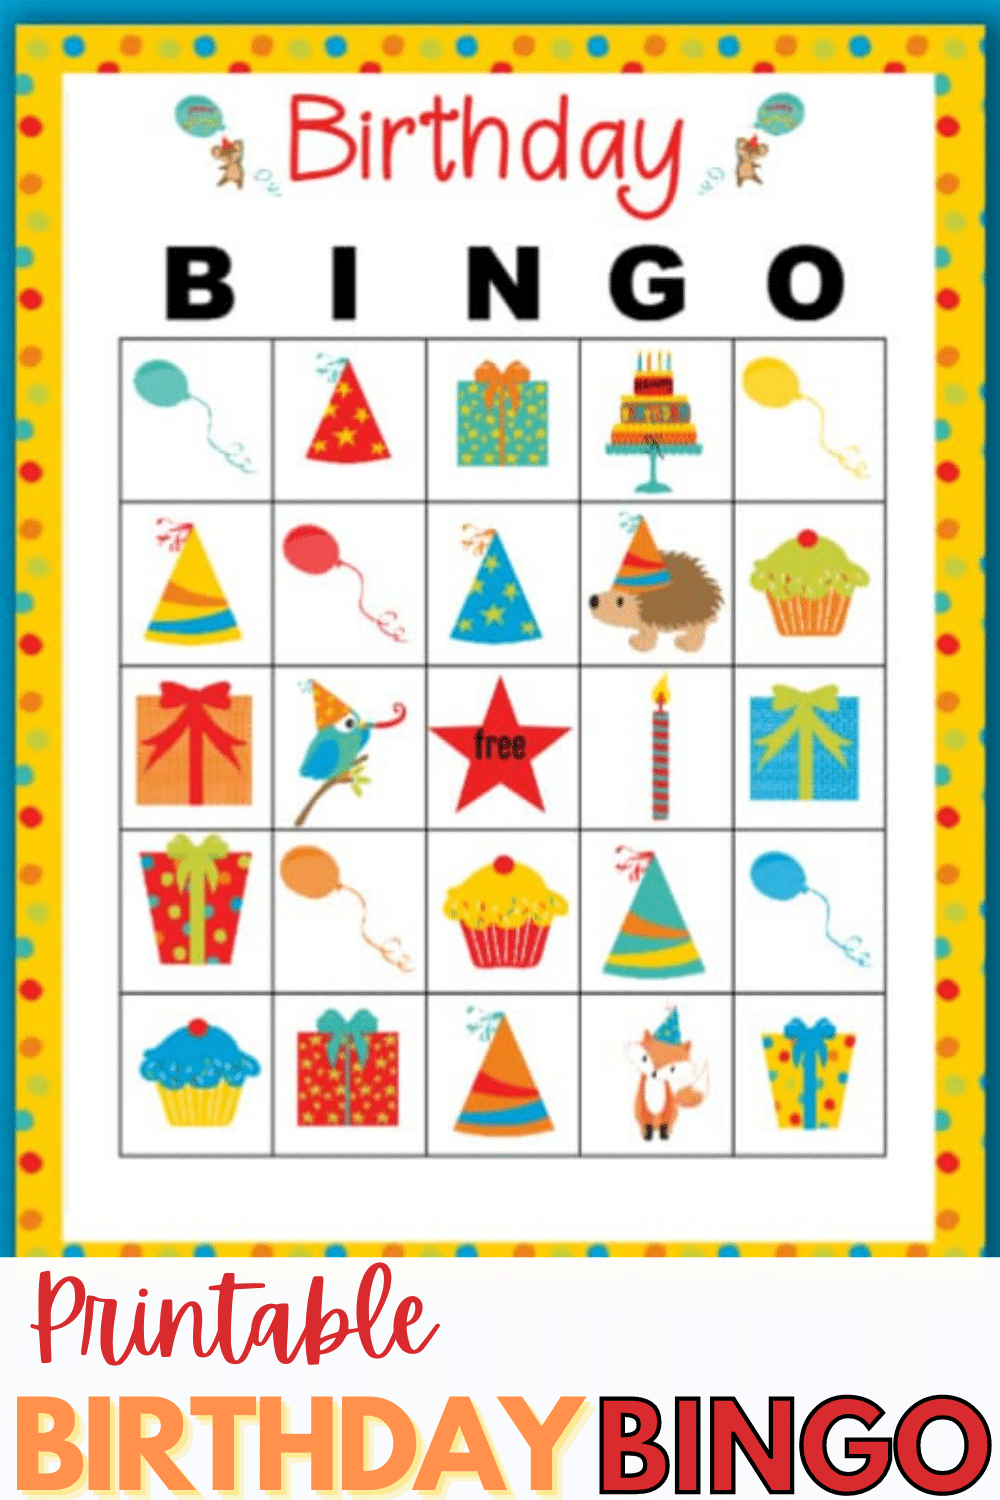 Printable Birthday Bingo Cards - Printable Lab